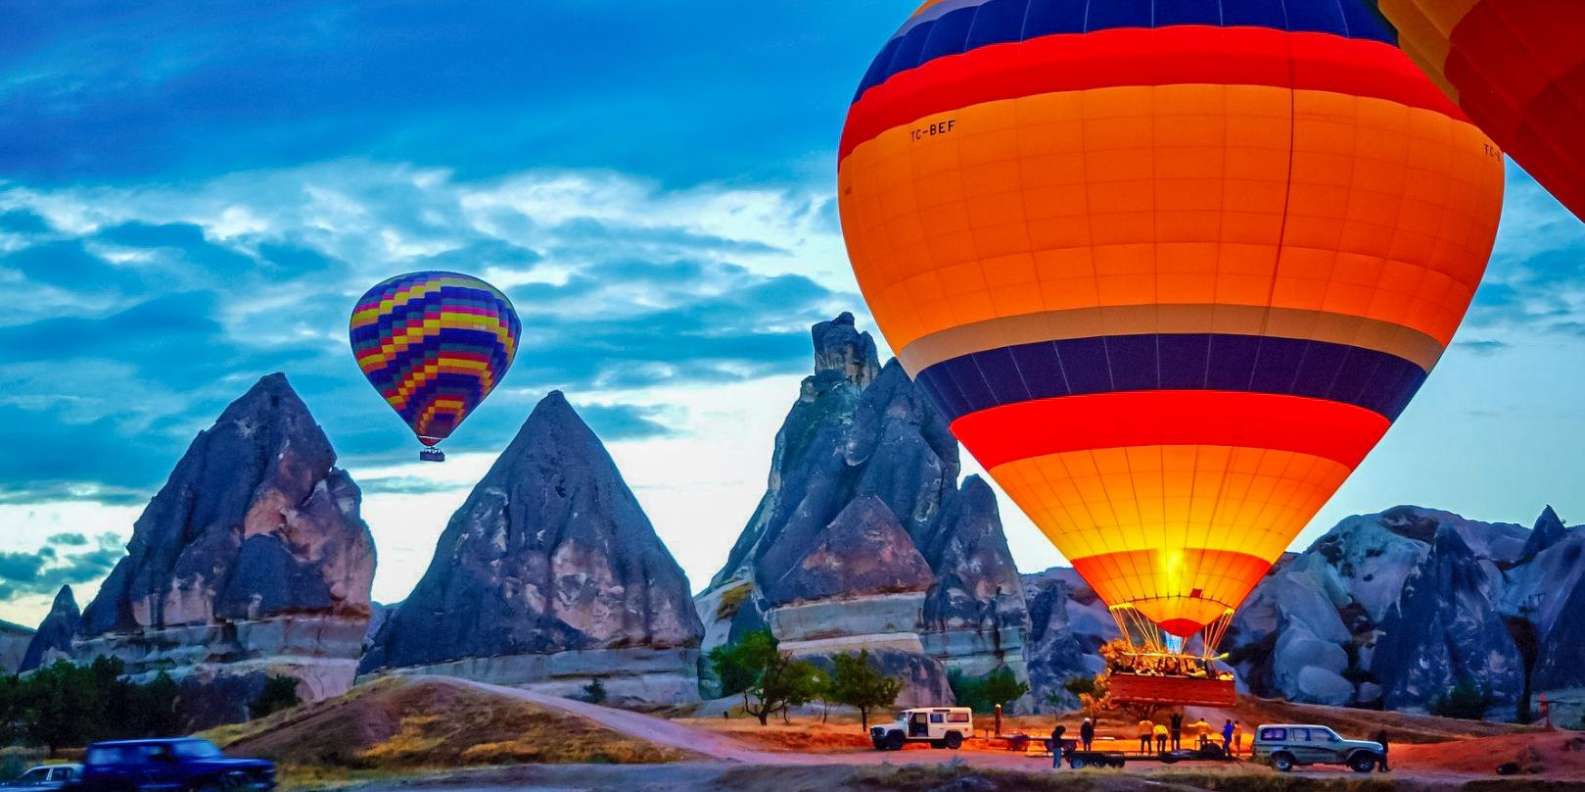 Cappadocia Hot Air Balloon Flight Getyourguide